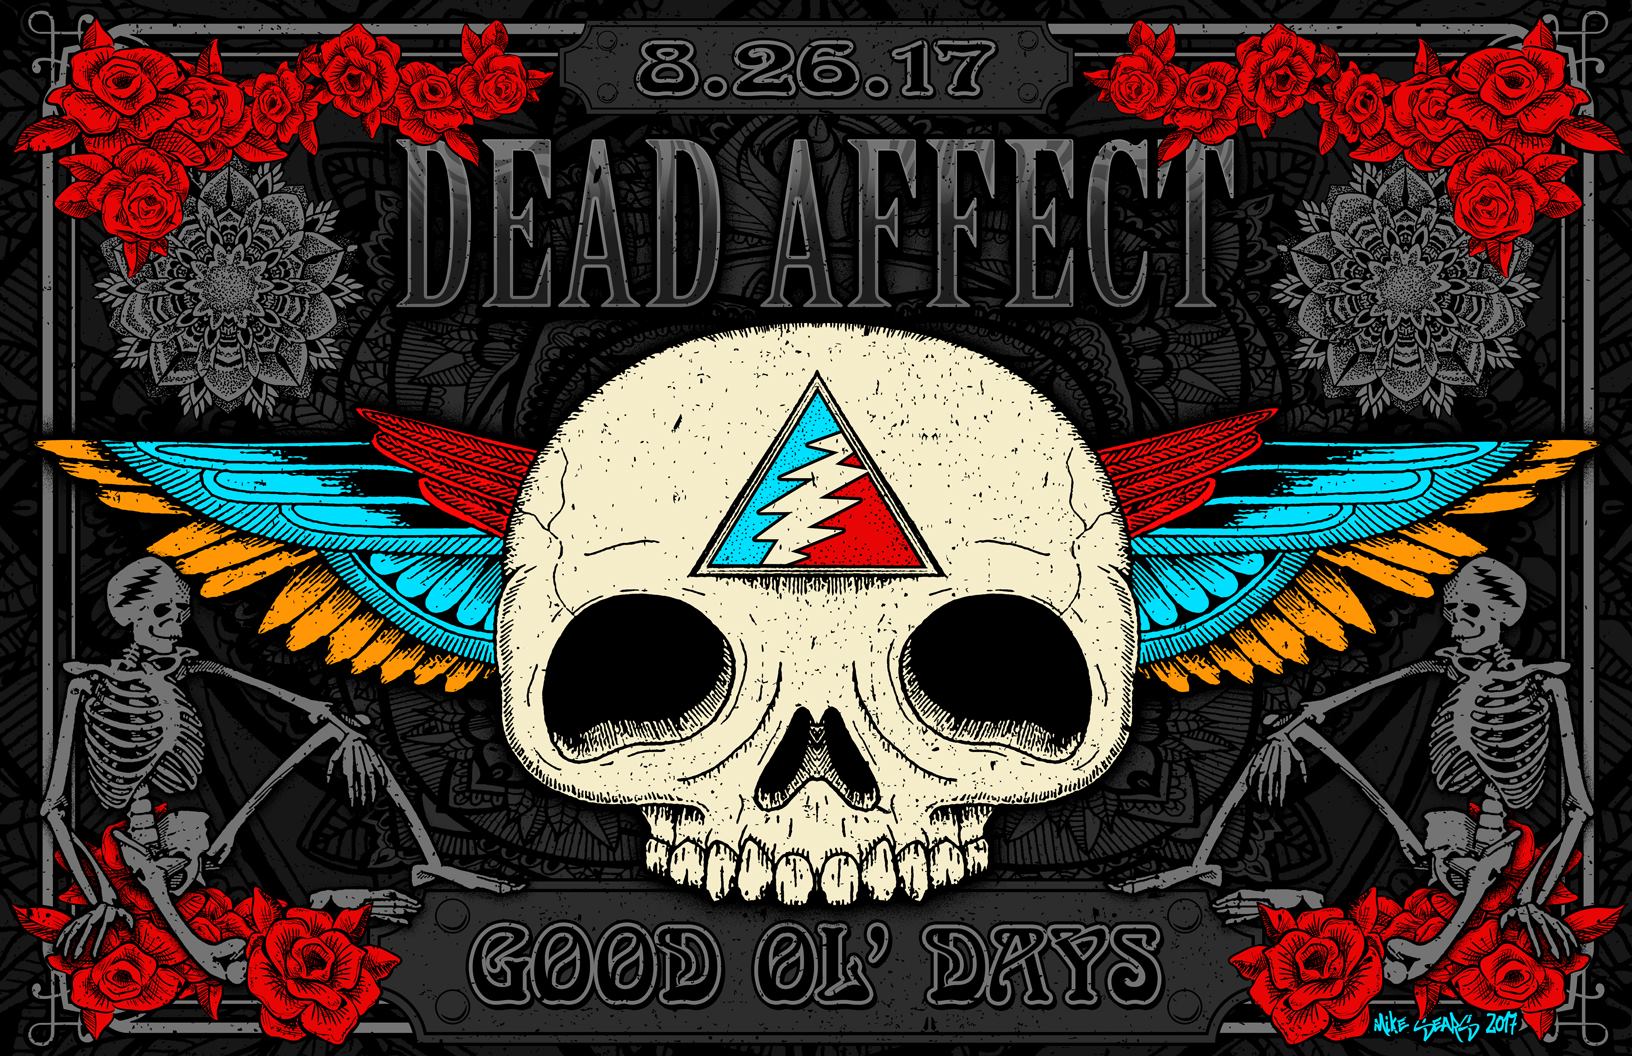 DeadAffect2017-08-26GoodOlDaysCummingGA.jpg